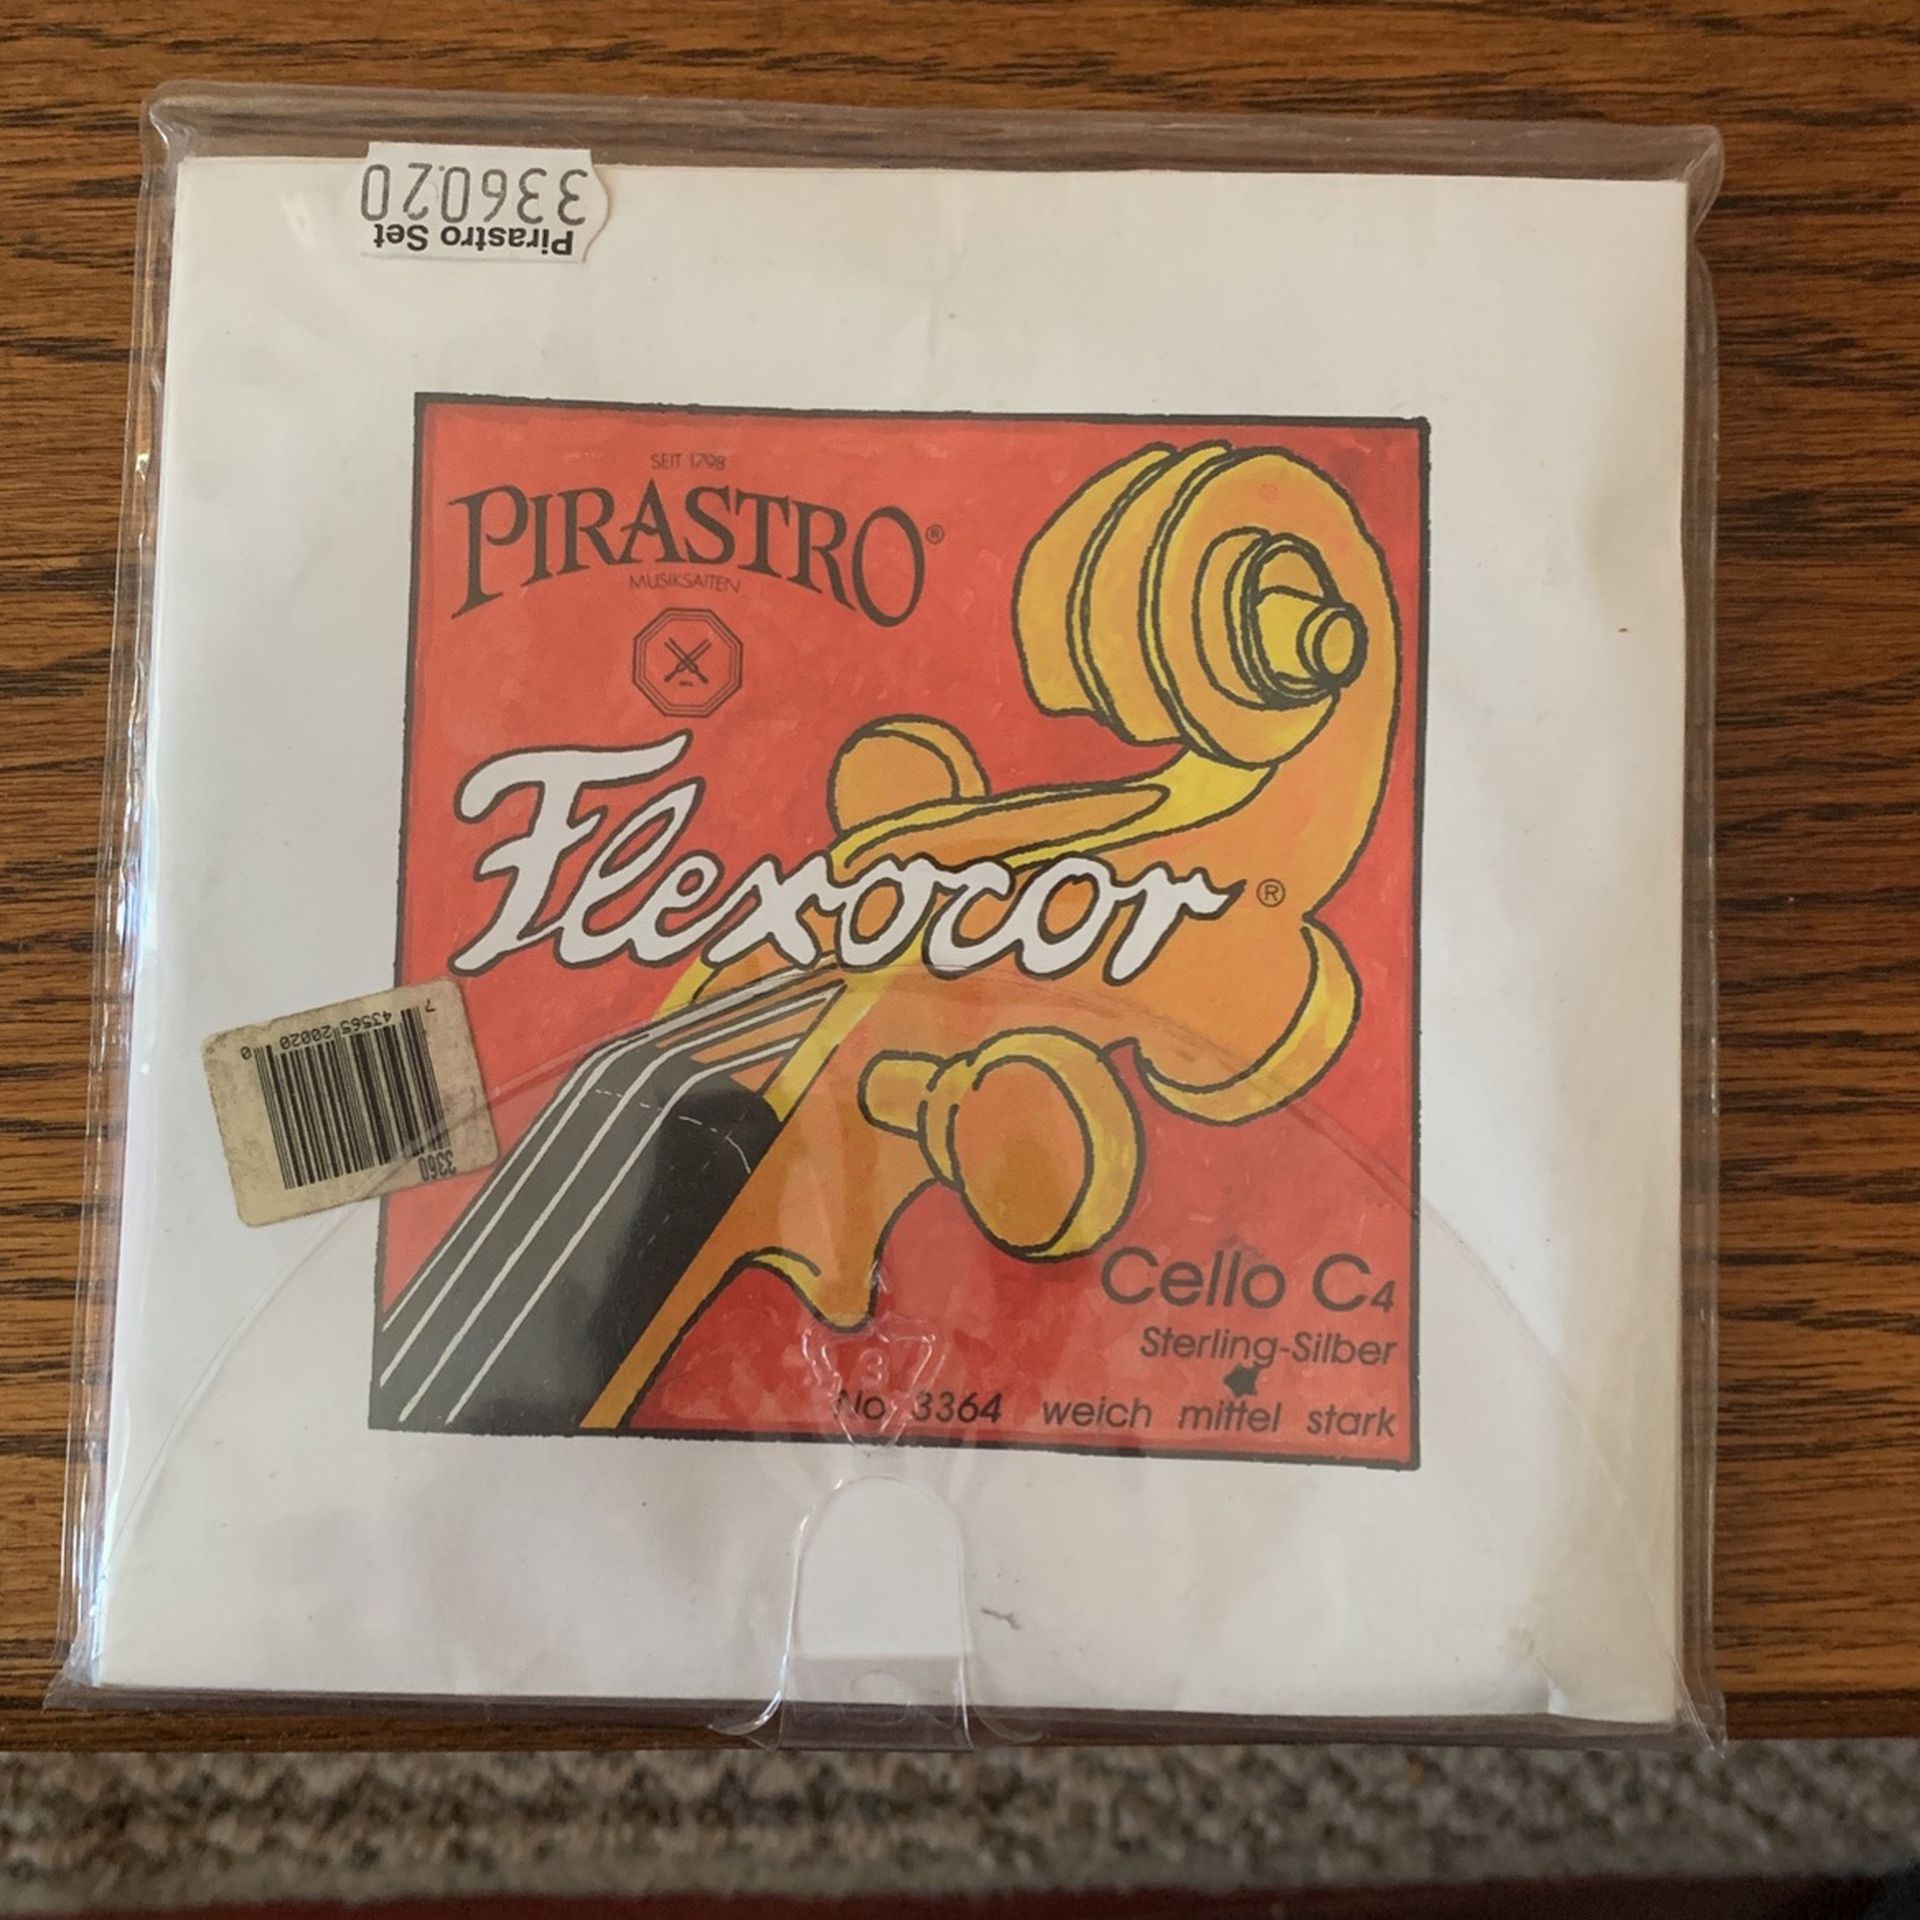 Pirastro Flexocor 4/4 Cello string Set New